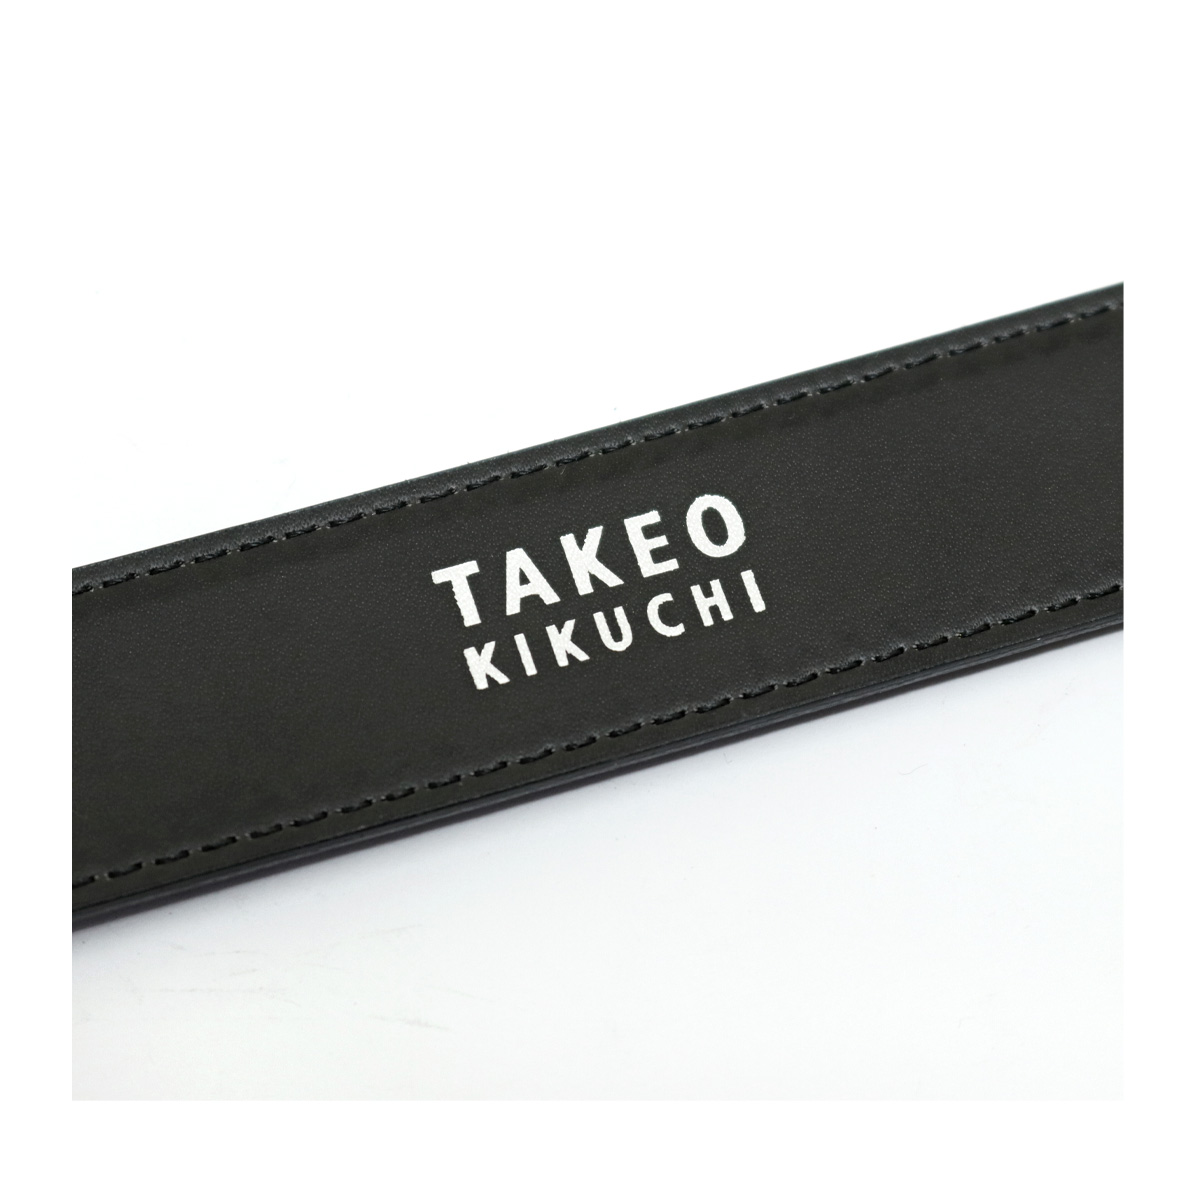  Takeo Kikuchi belt men's 0050123 TAKEO KIKUCHI made in Japan business casual formal cow leather original leather brand gift present gentleman for man 